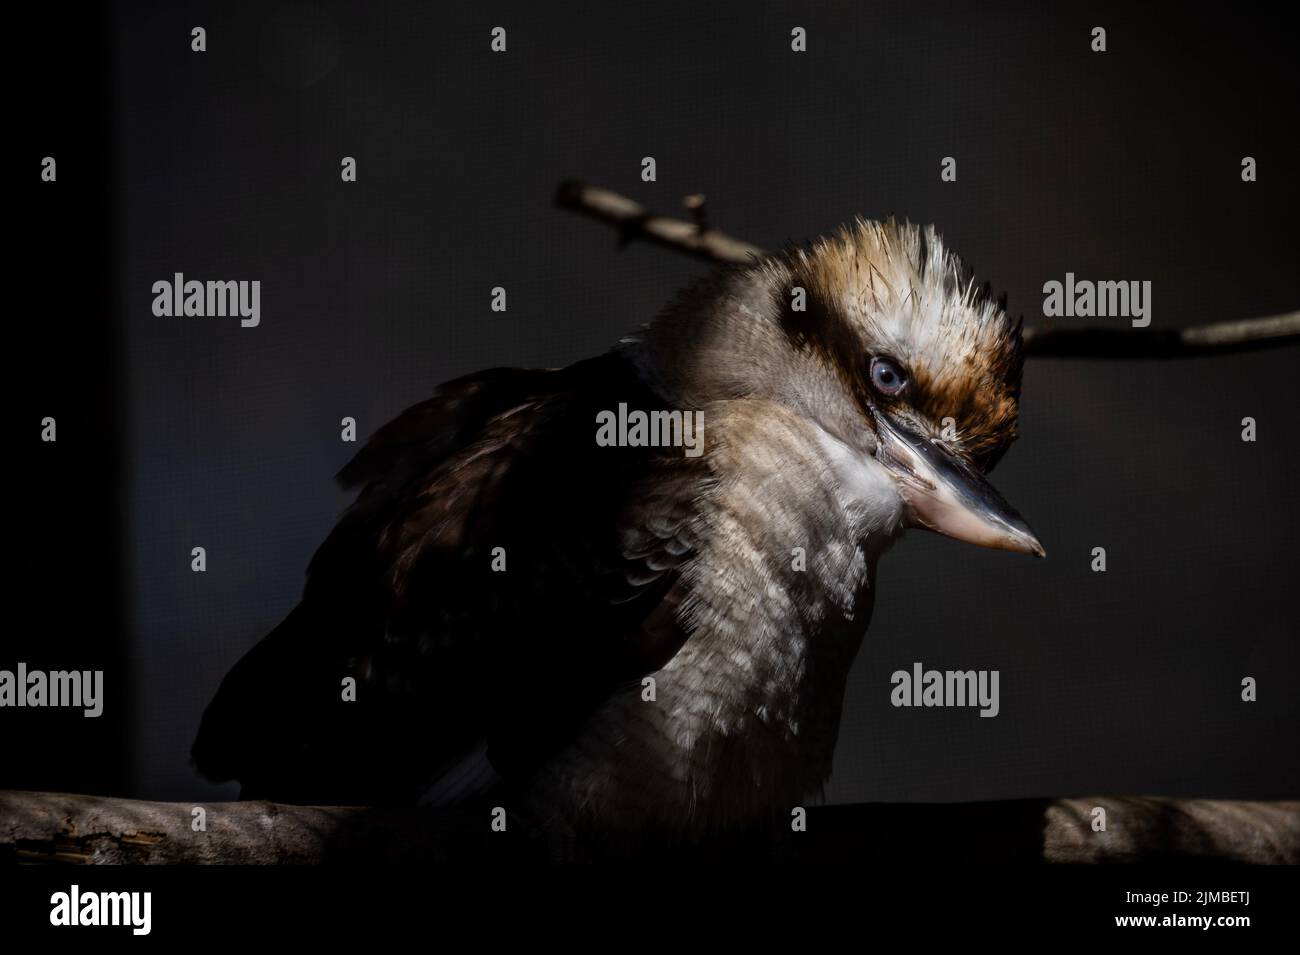 A closeup of a laughing kookaburra, Dacelo novaeguineae in darkness. Stock Photo